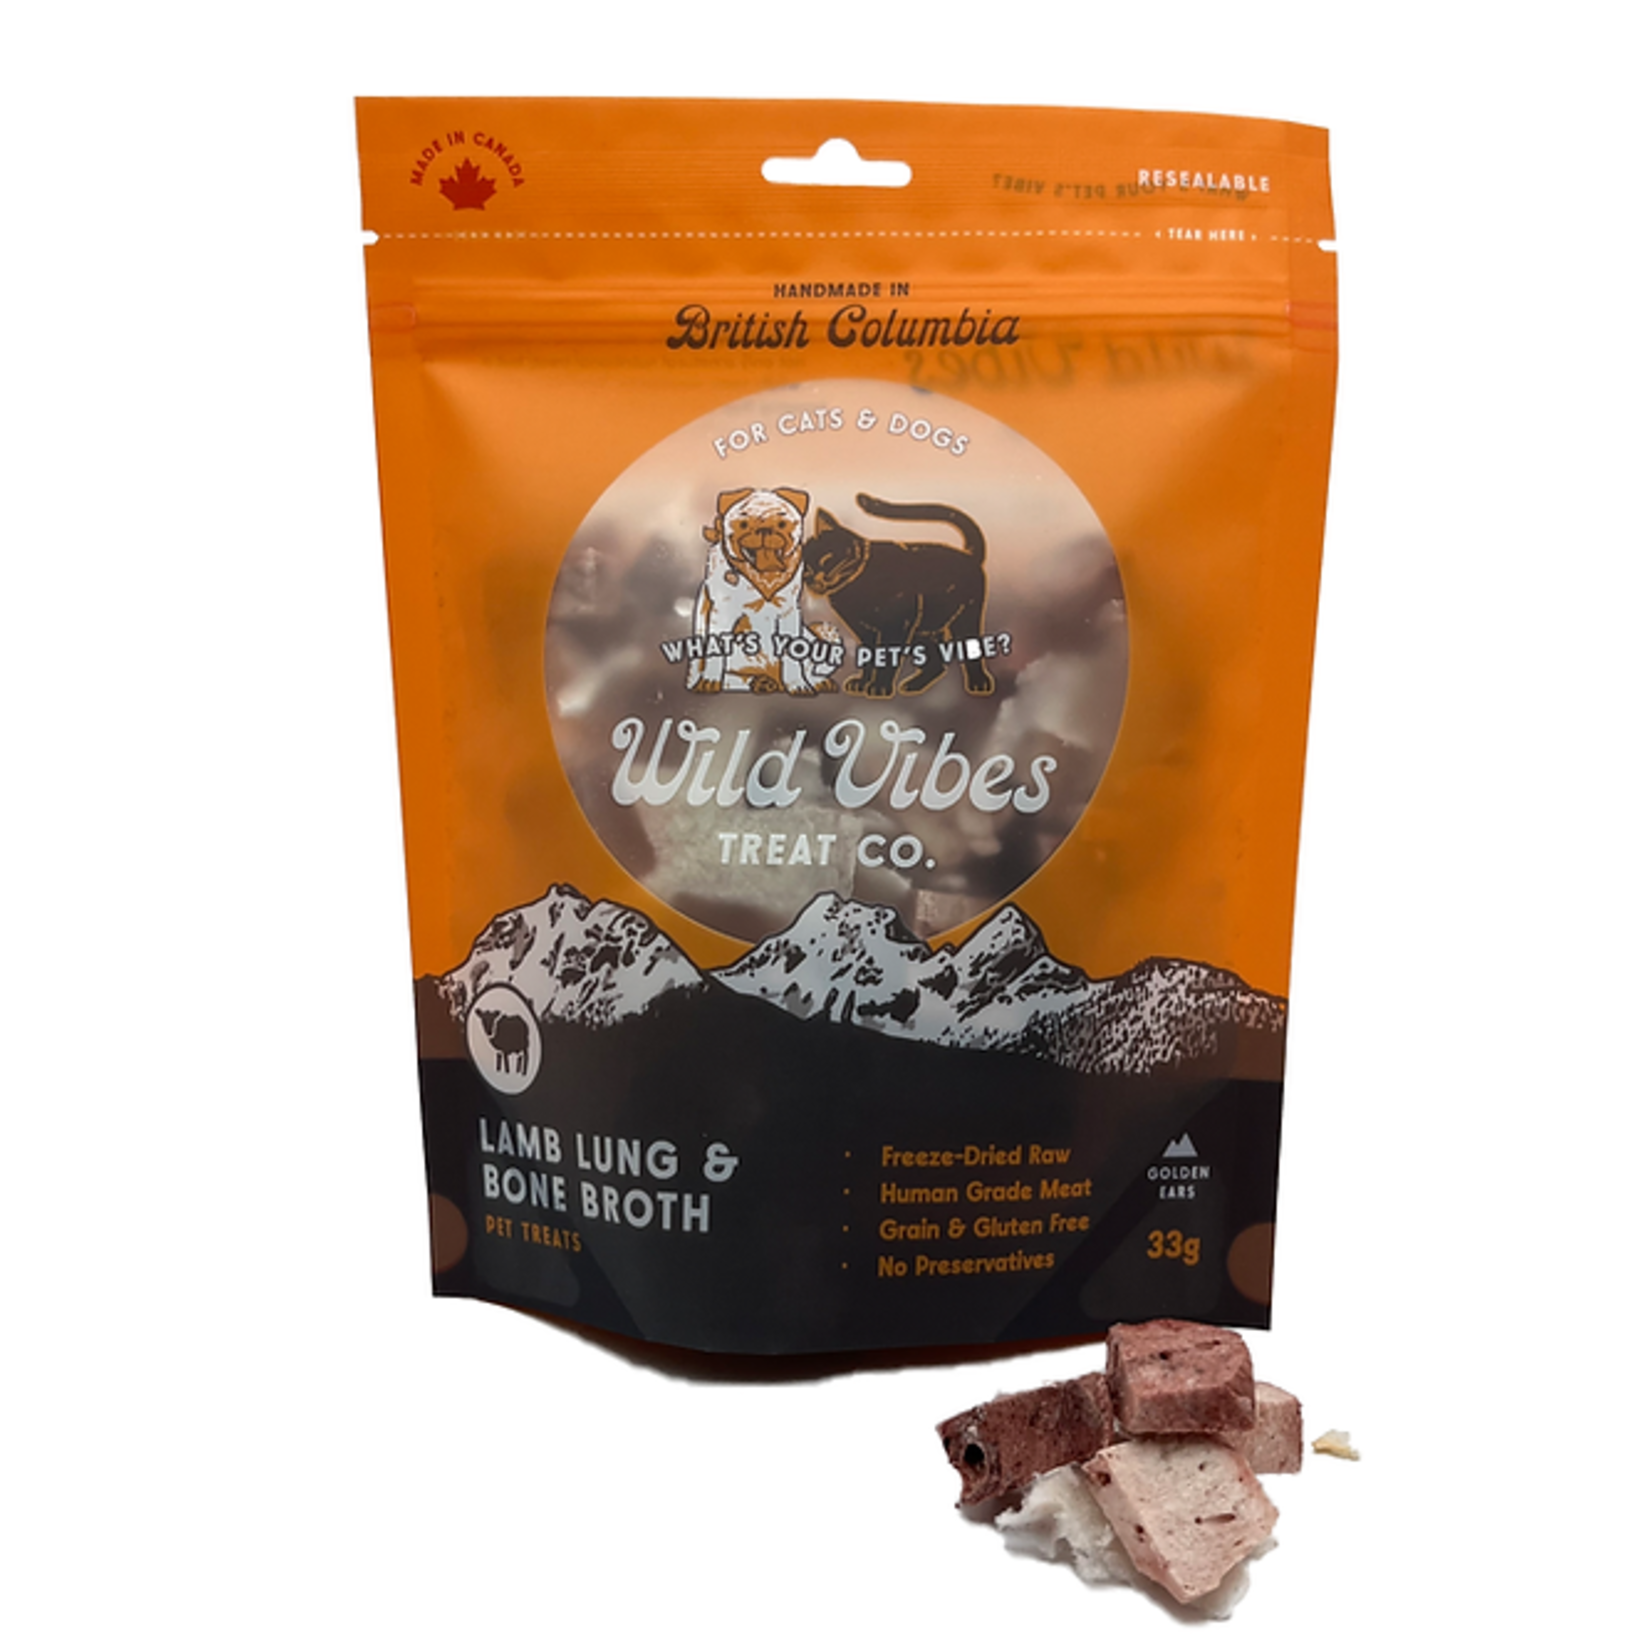 Wild Vibes Treat Co. Wild Vibes Lamb Lung & Bone Broth 26g